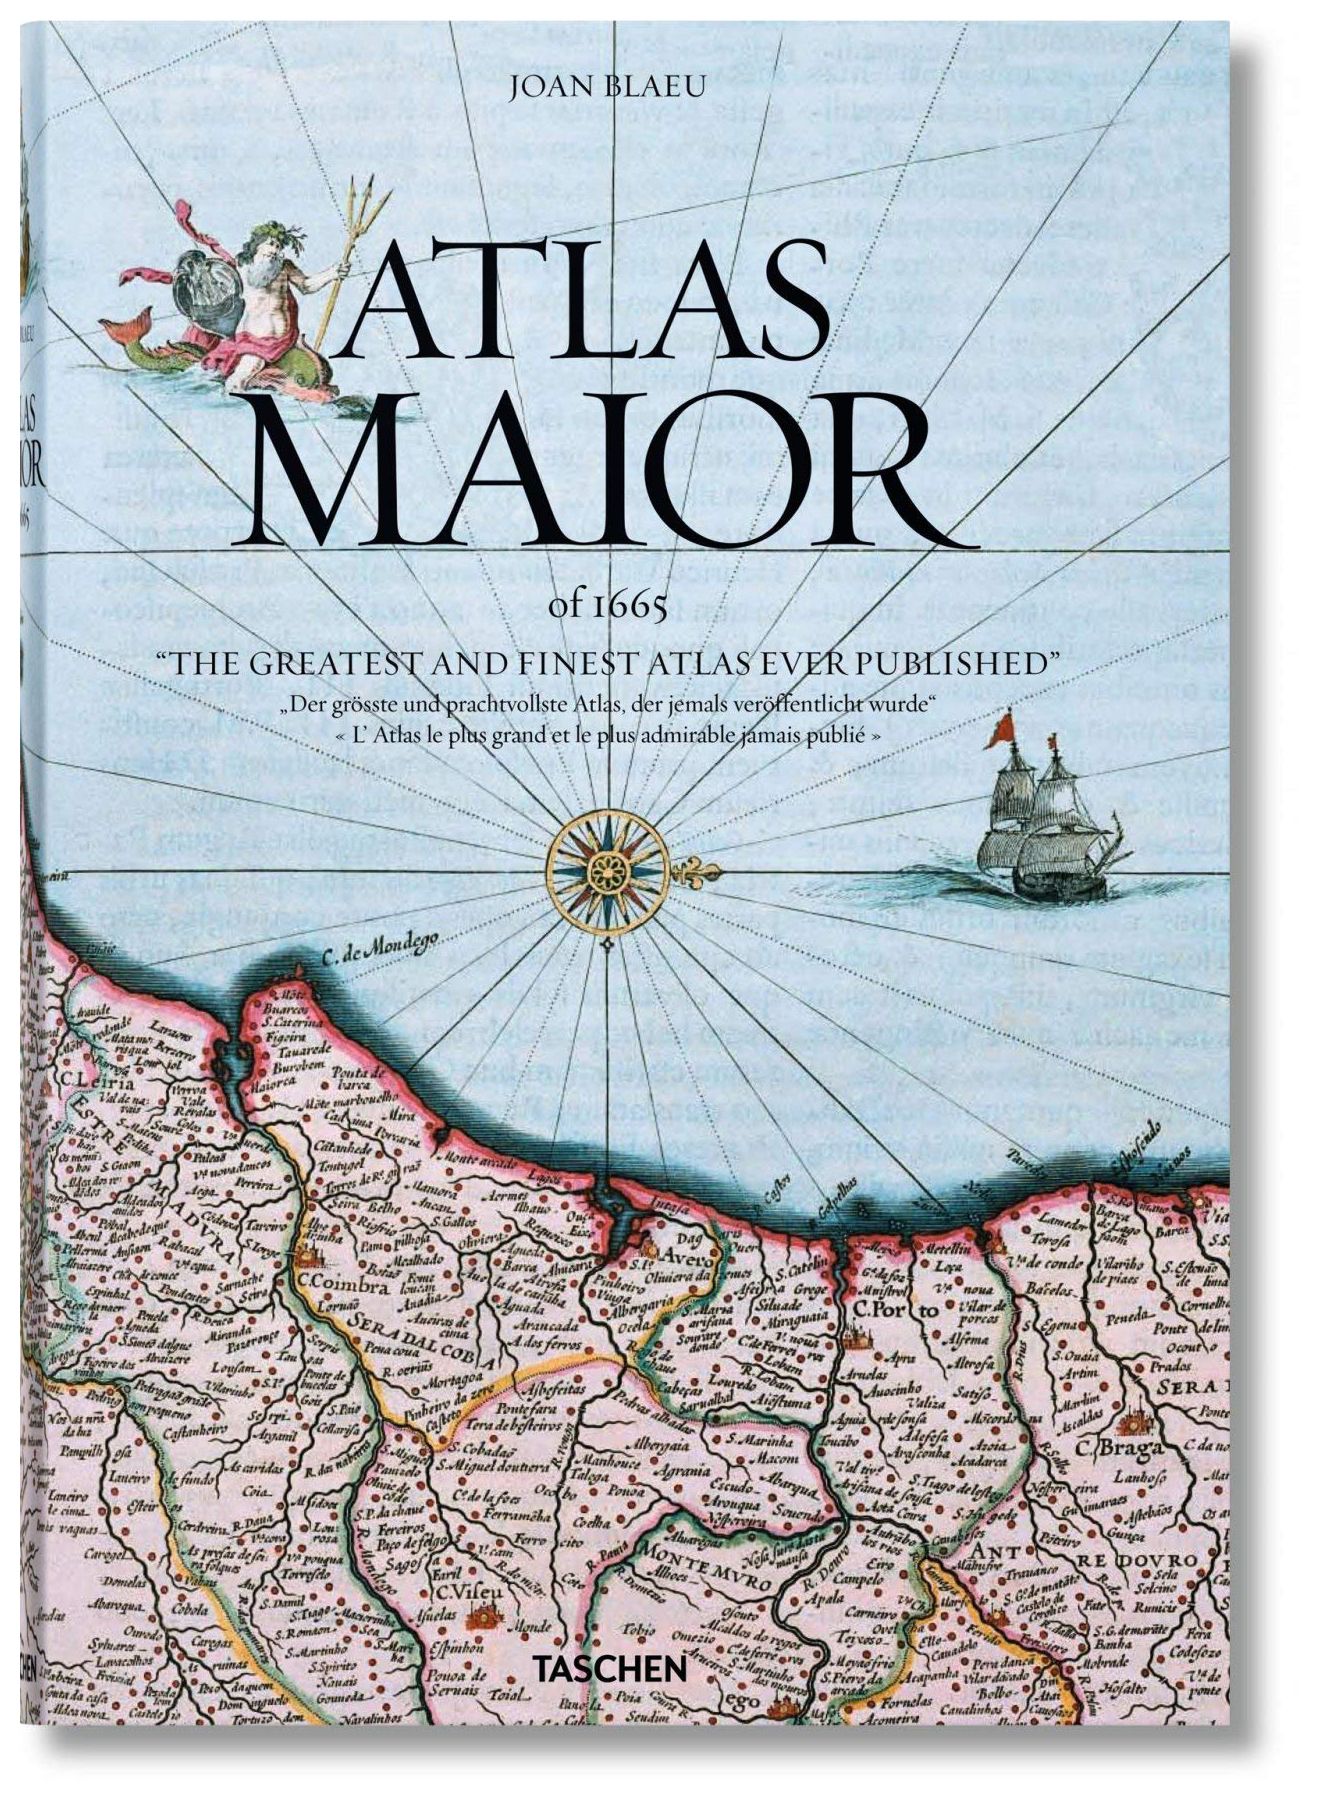 Joan Blaeu - Atlas Maior by Joan Blaeu